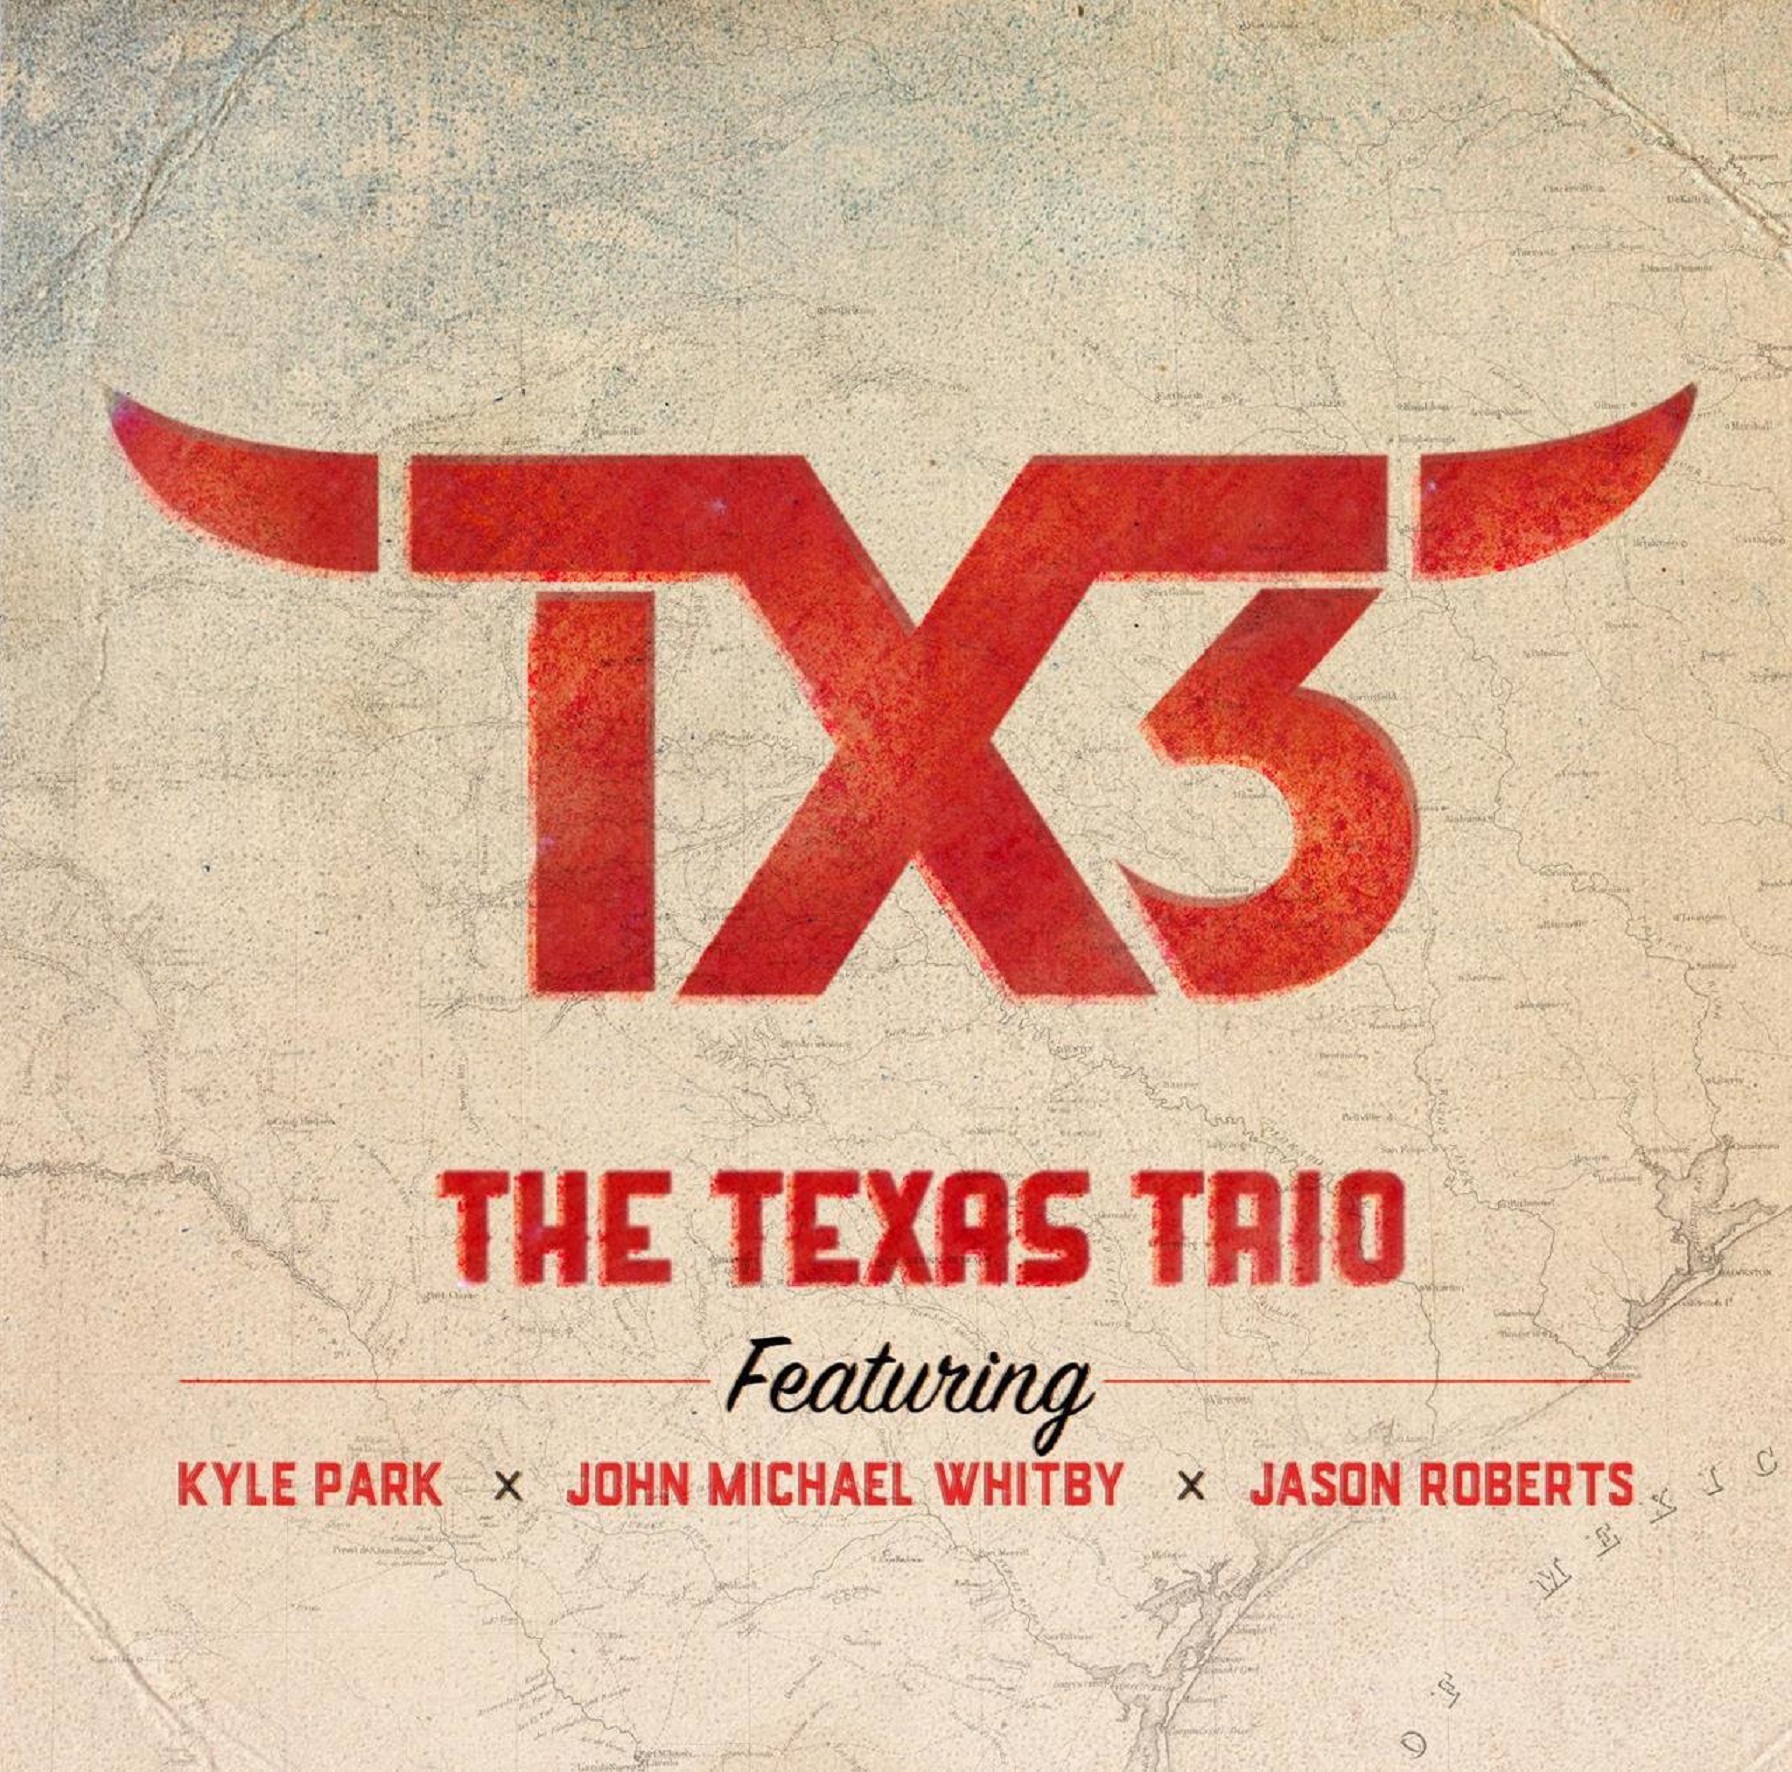 Kyle Park, Jason Roberts & John Michael Whitby Record Debut as The Texas Trio; Album Arrives May 17